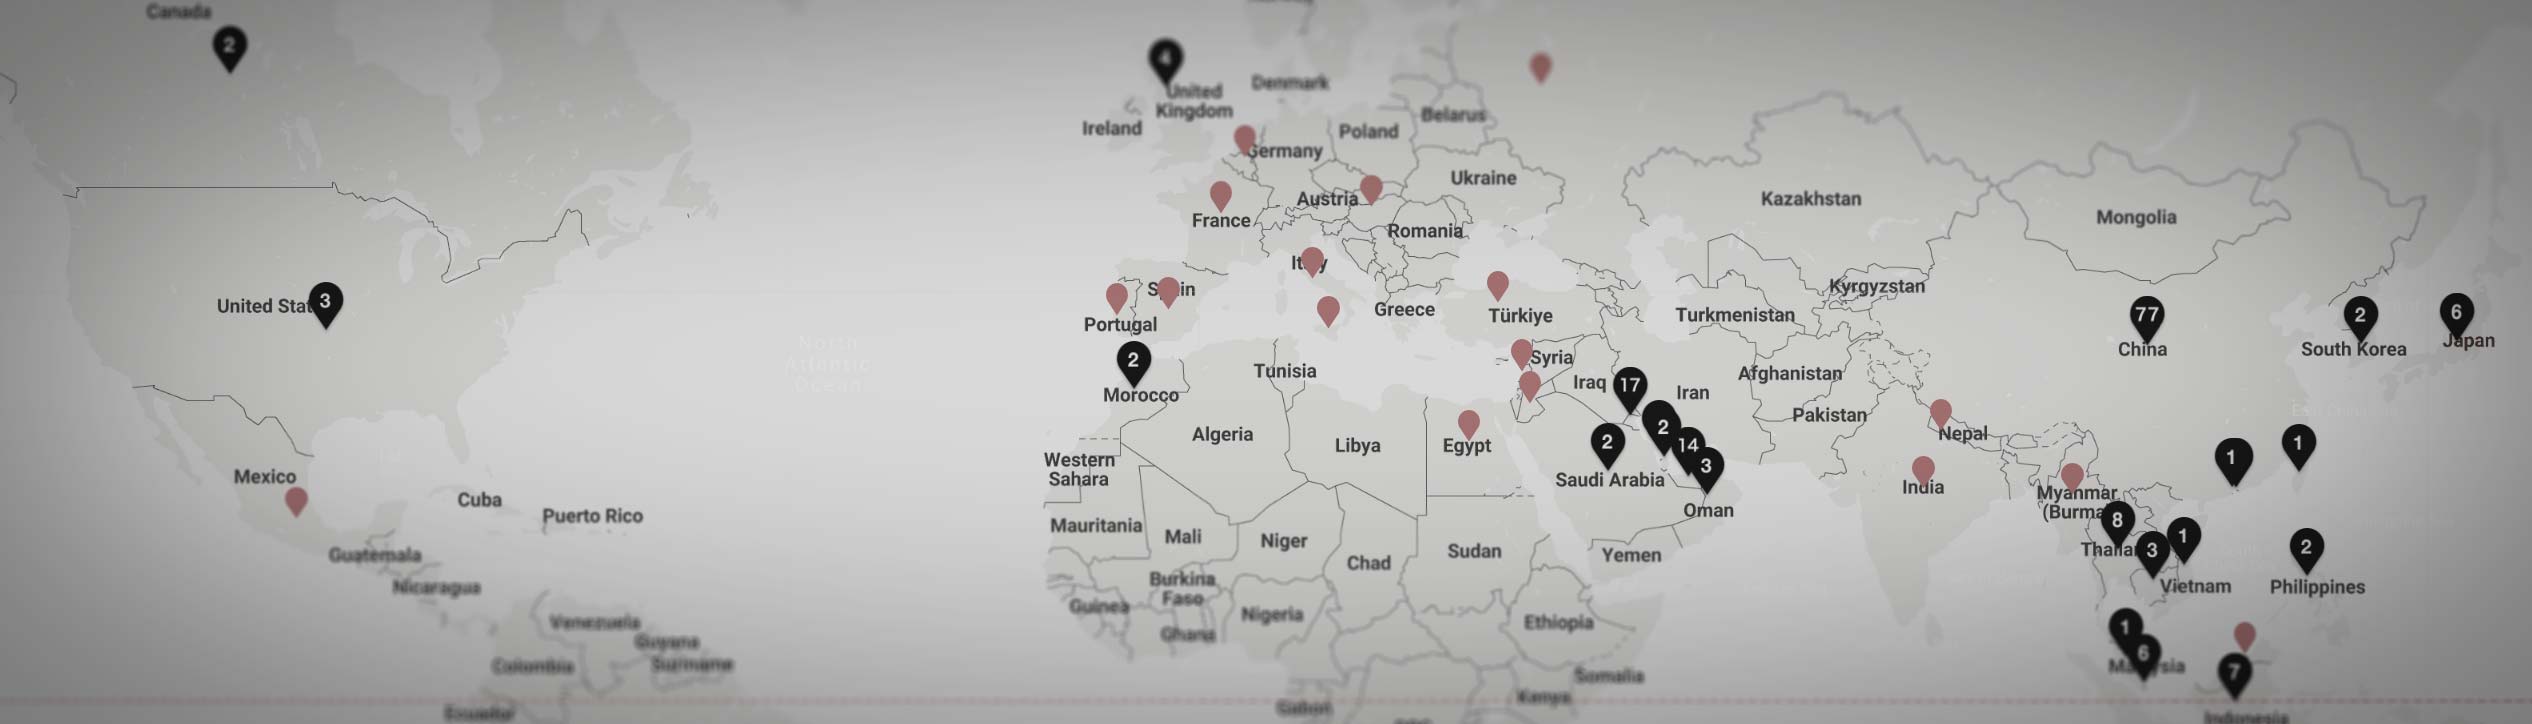 % ARABICA locations worldwide map